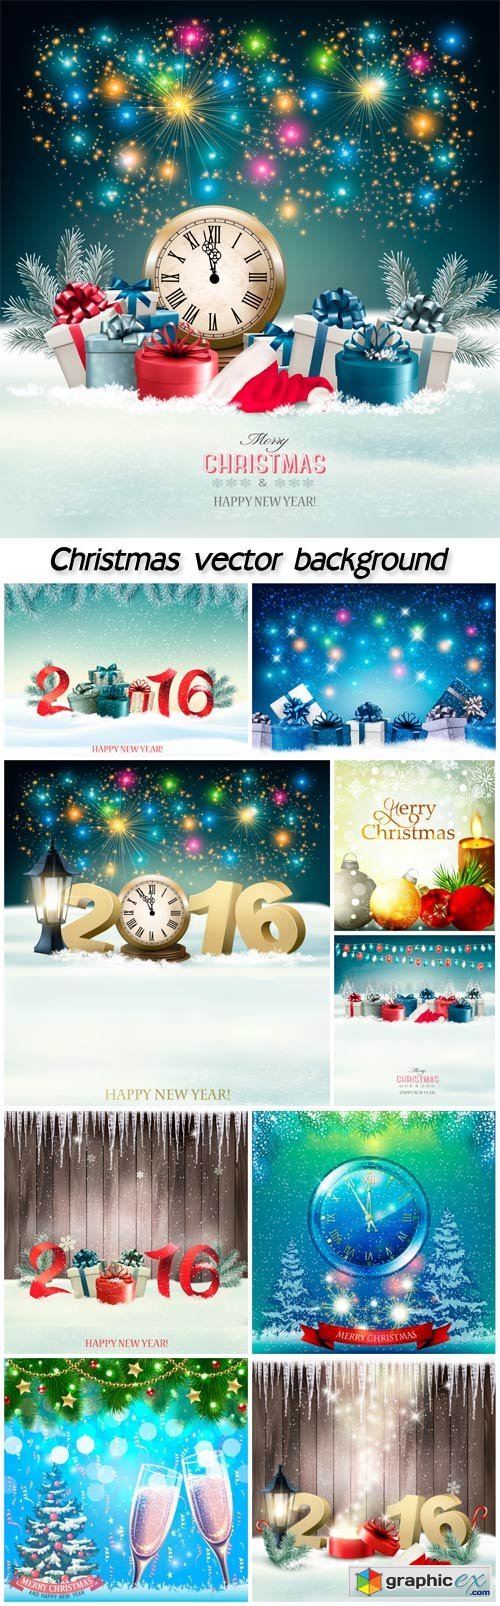 Christmas, winter beautiful vector backgrounds